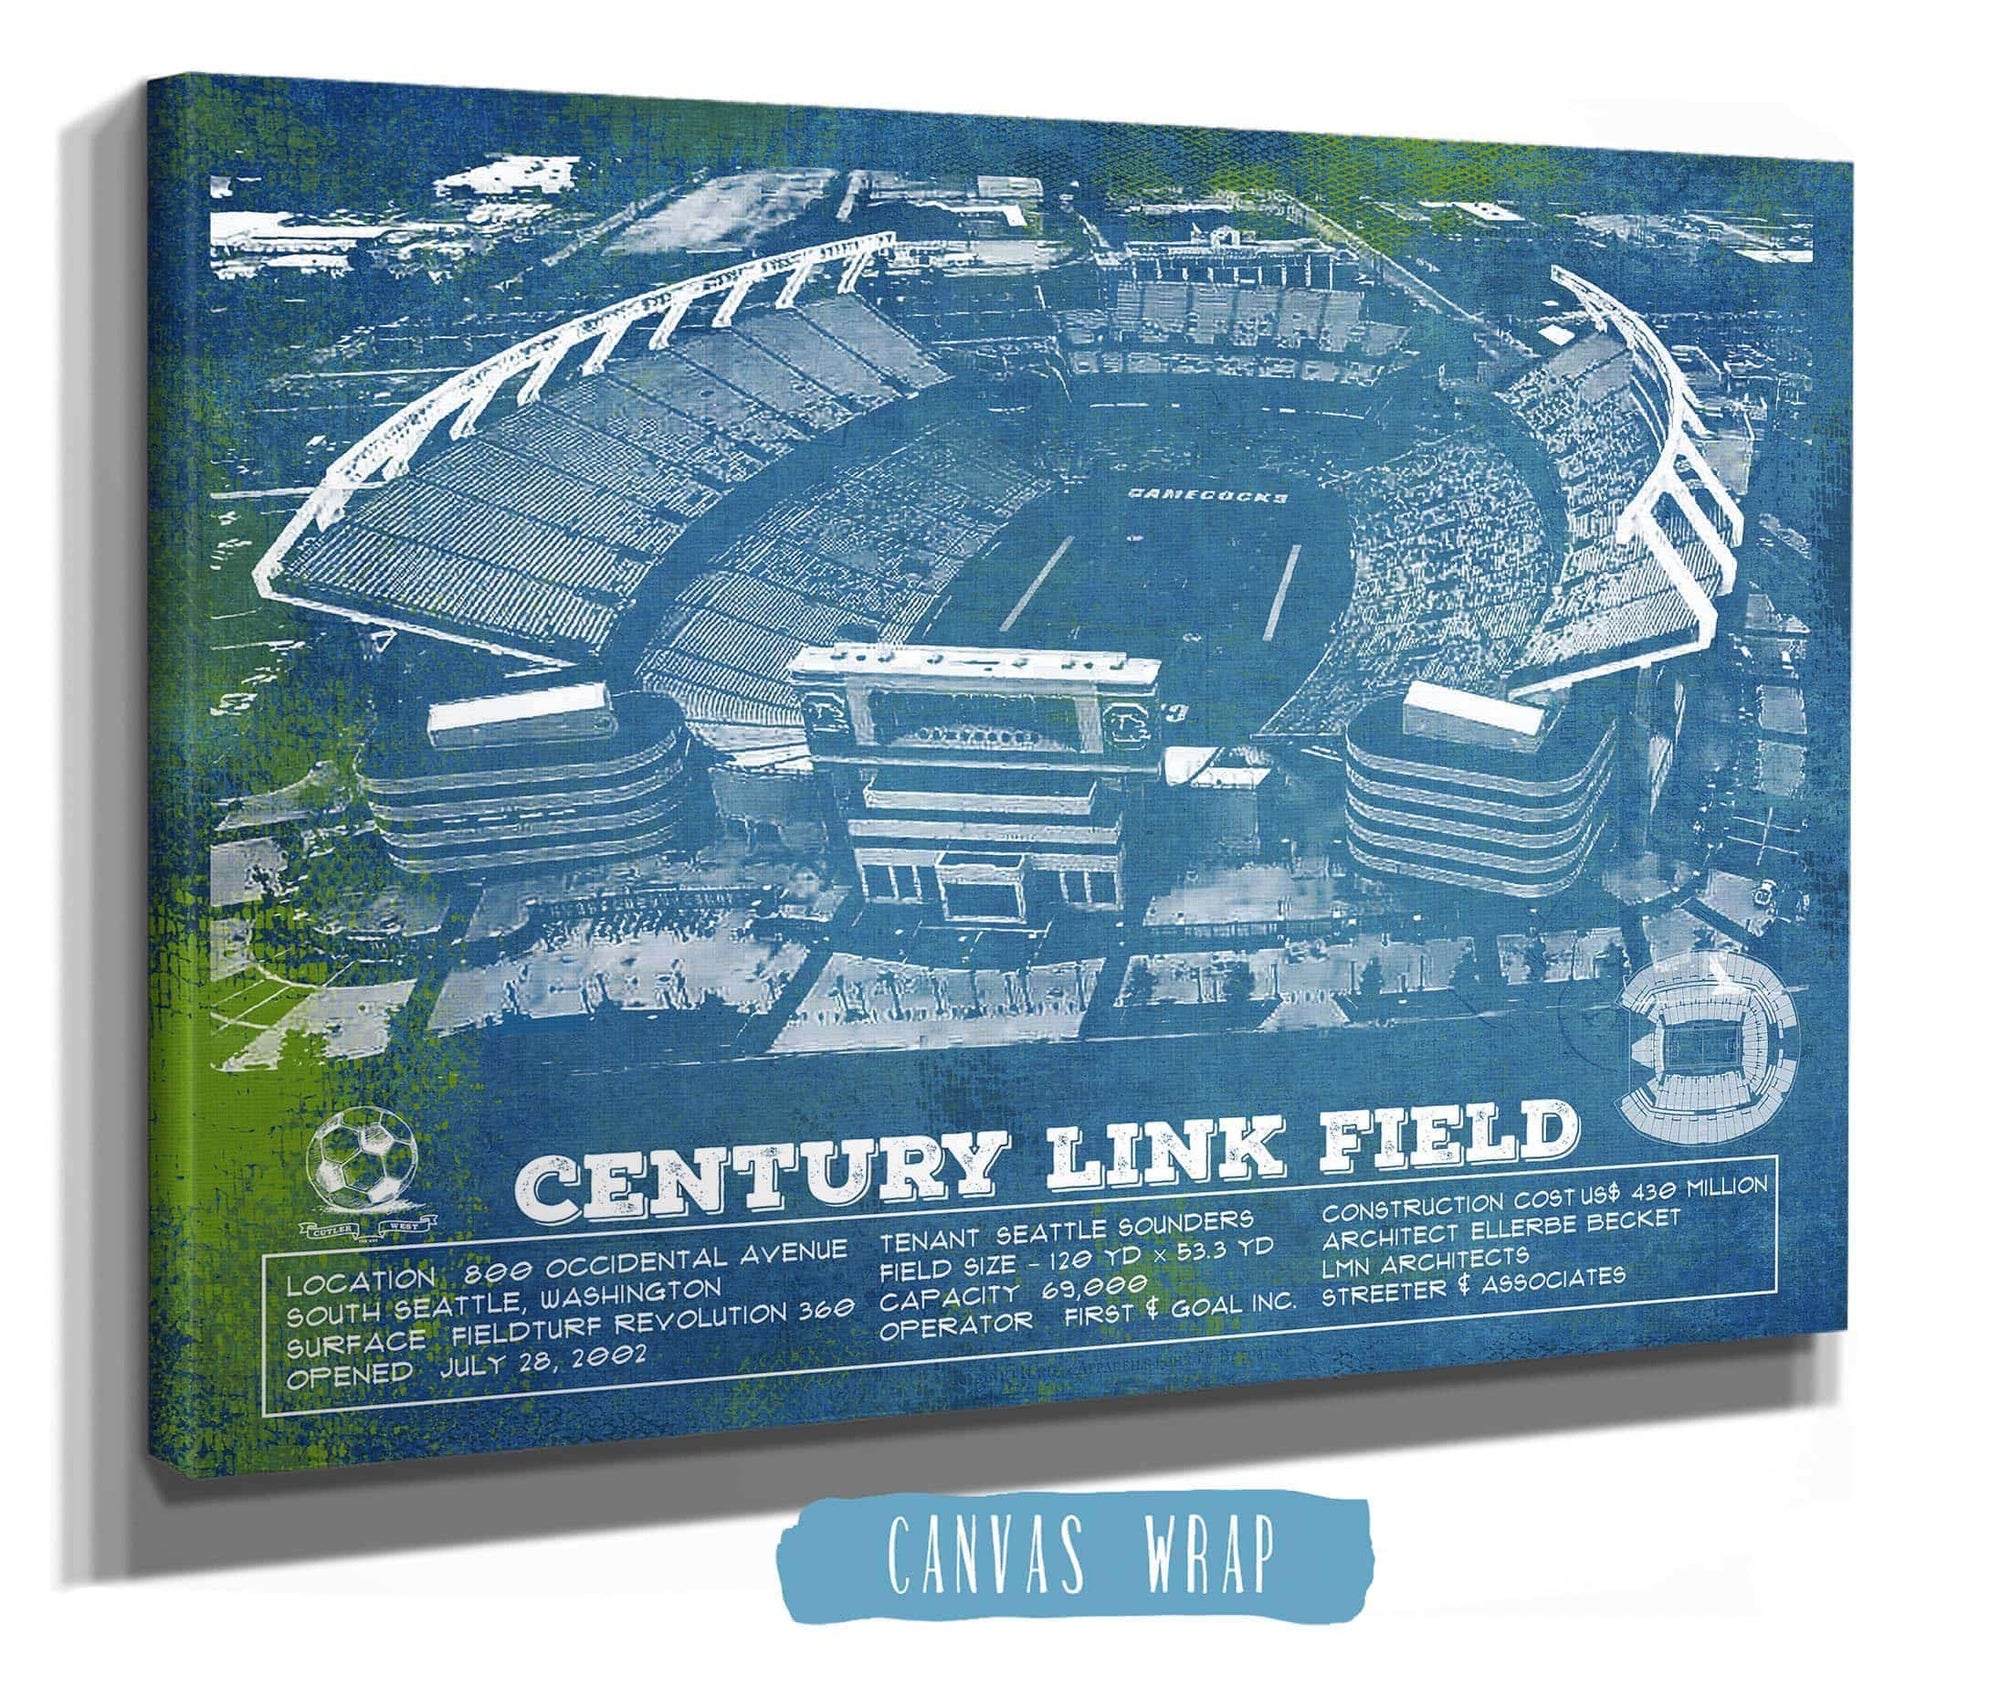 Cutler West College Football Collection Williams-Brice Stadium Art - South Carolina Gamecocks Vintage Blueprint Art Chart